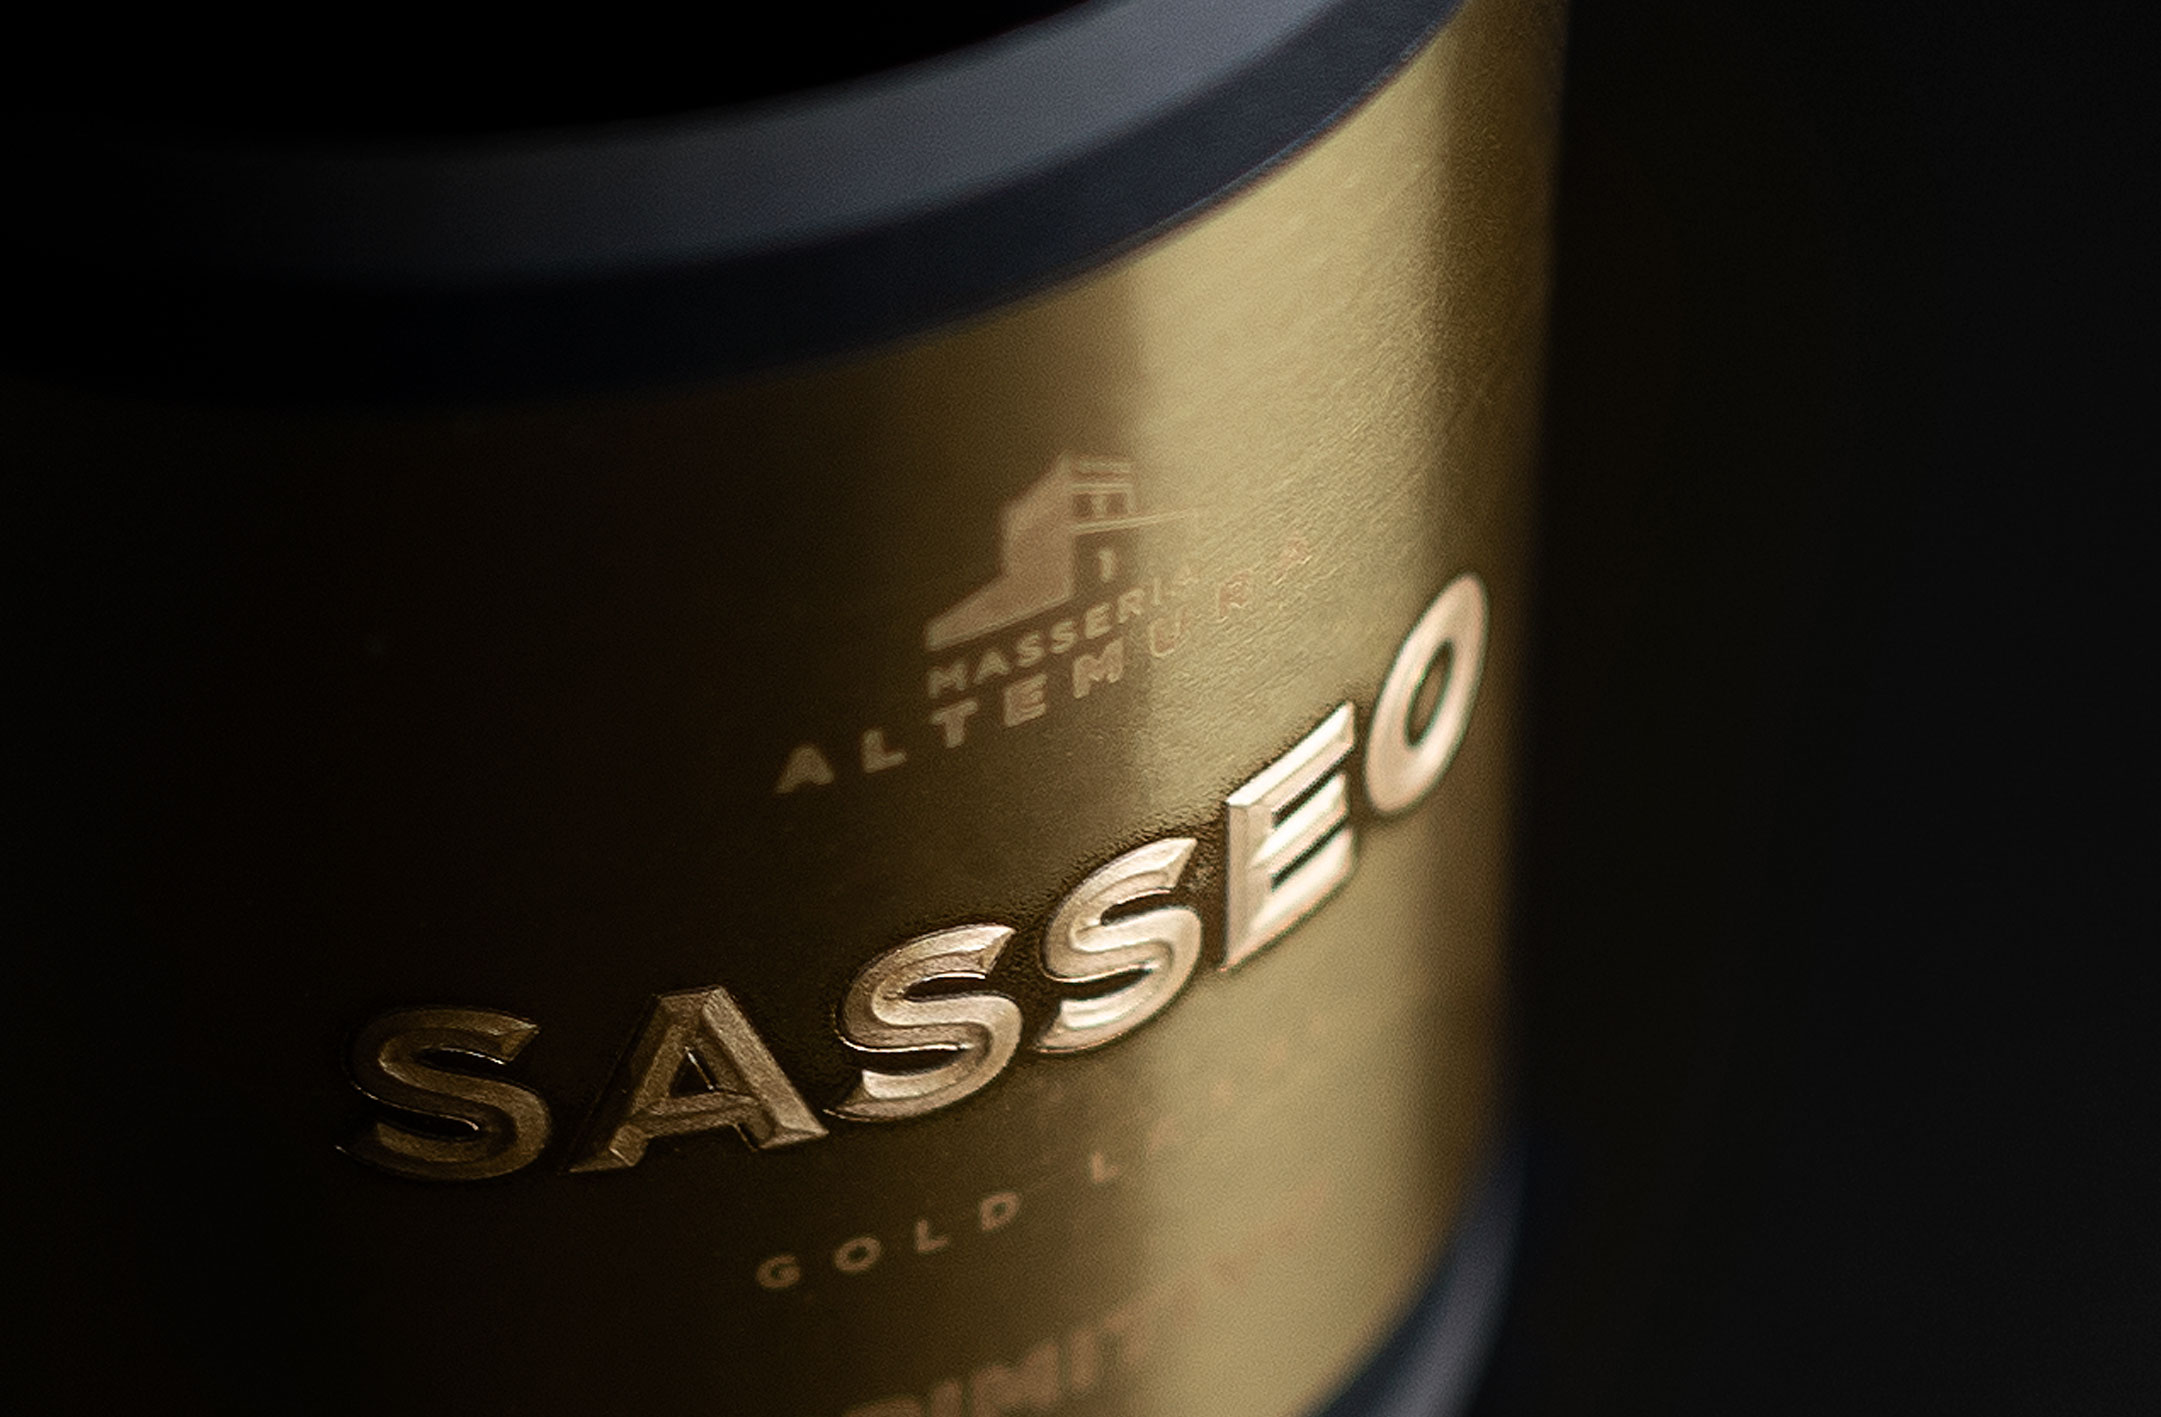 Sasseo Gold Label